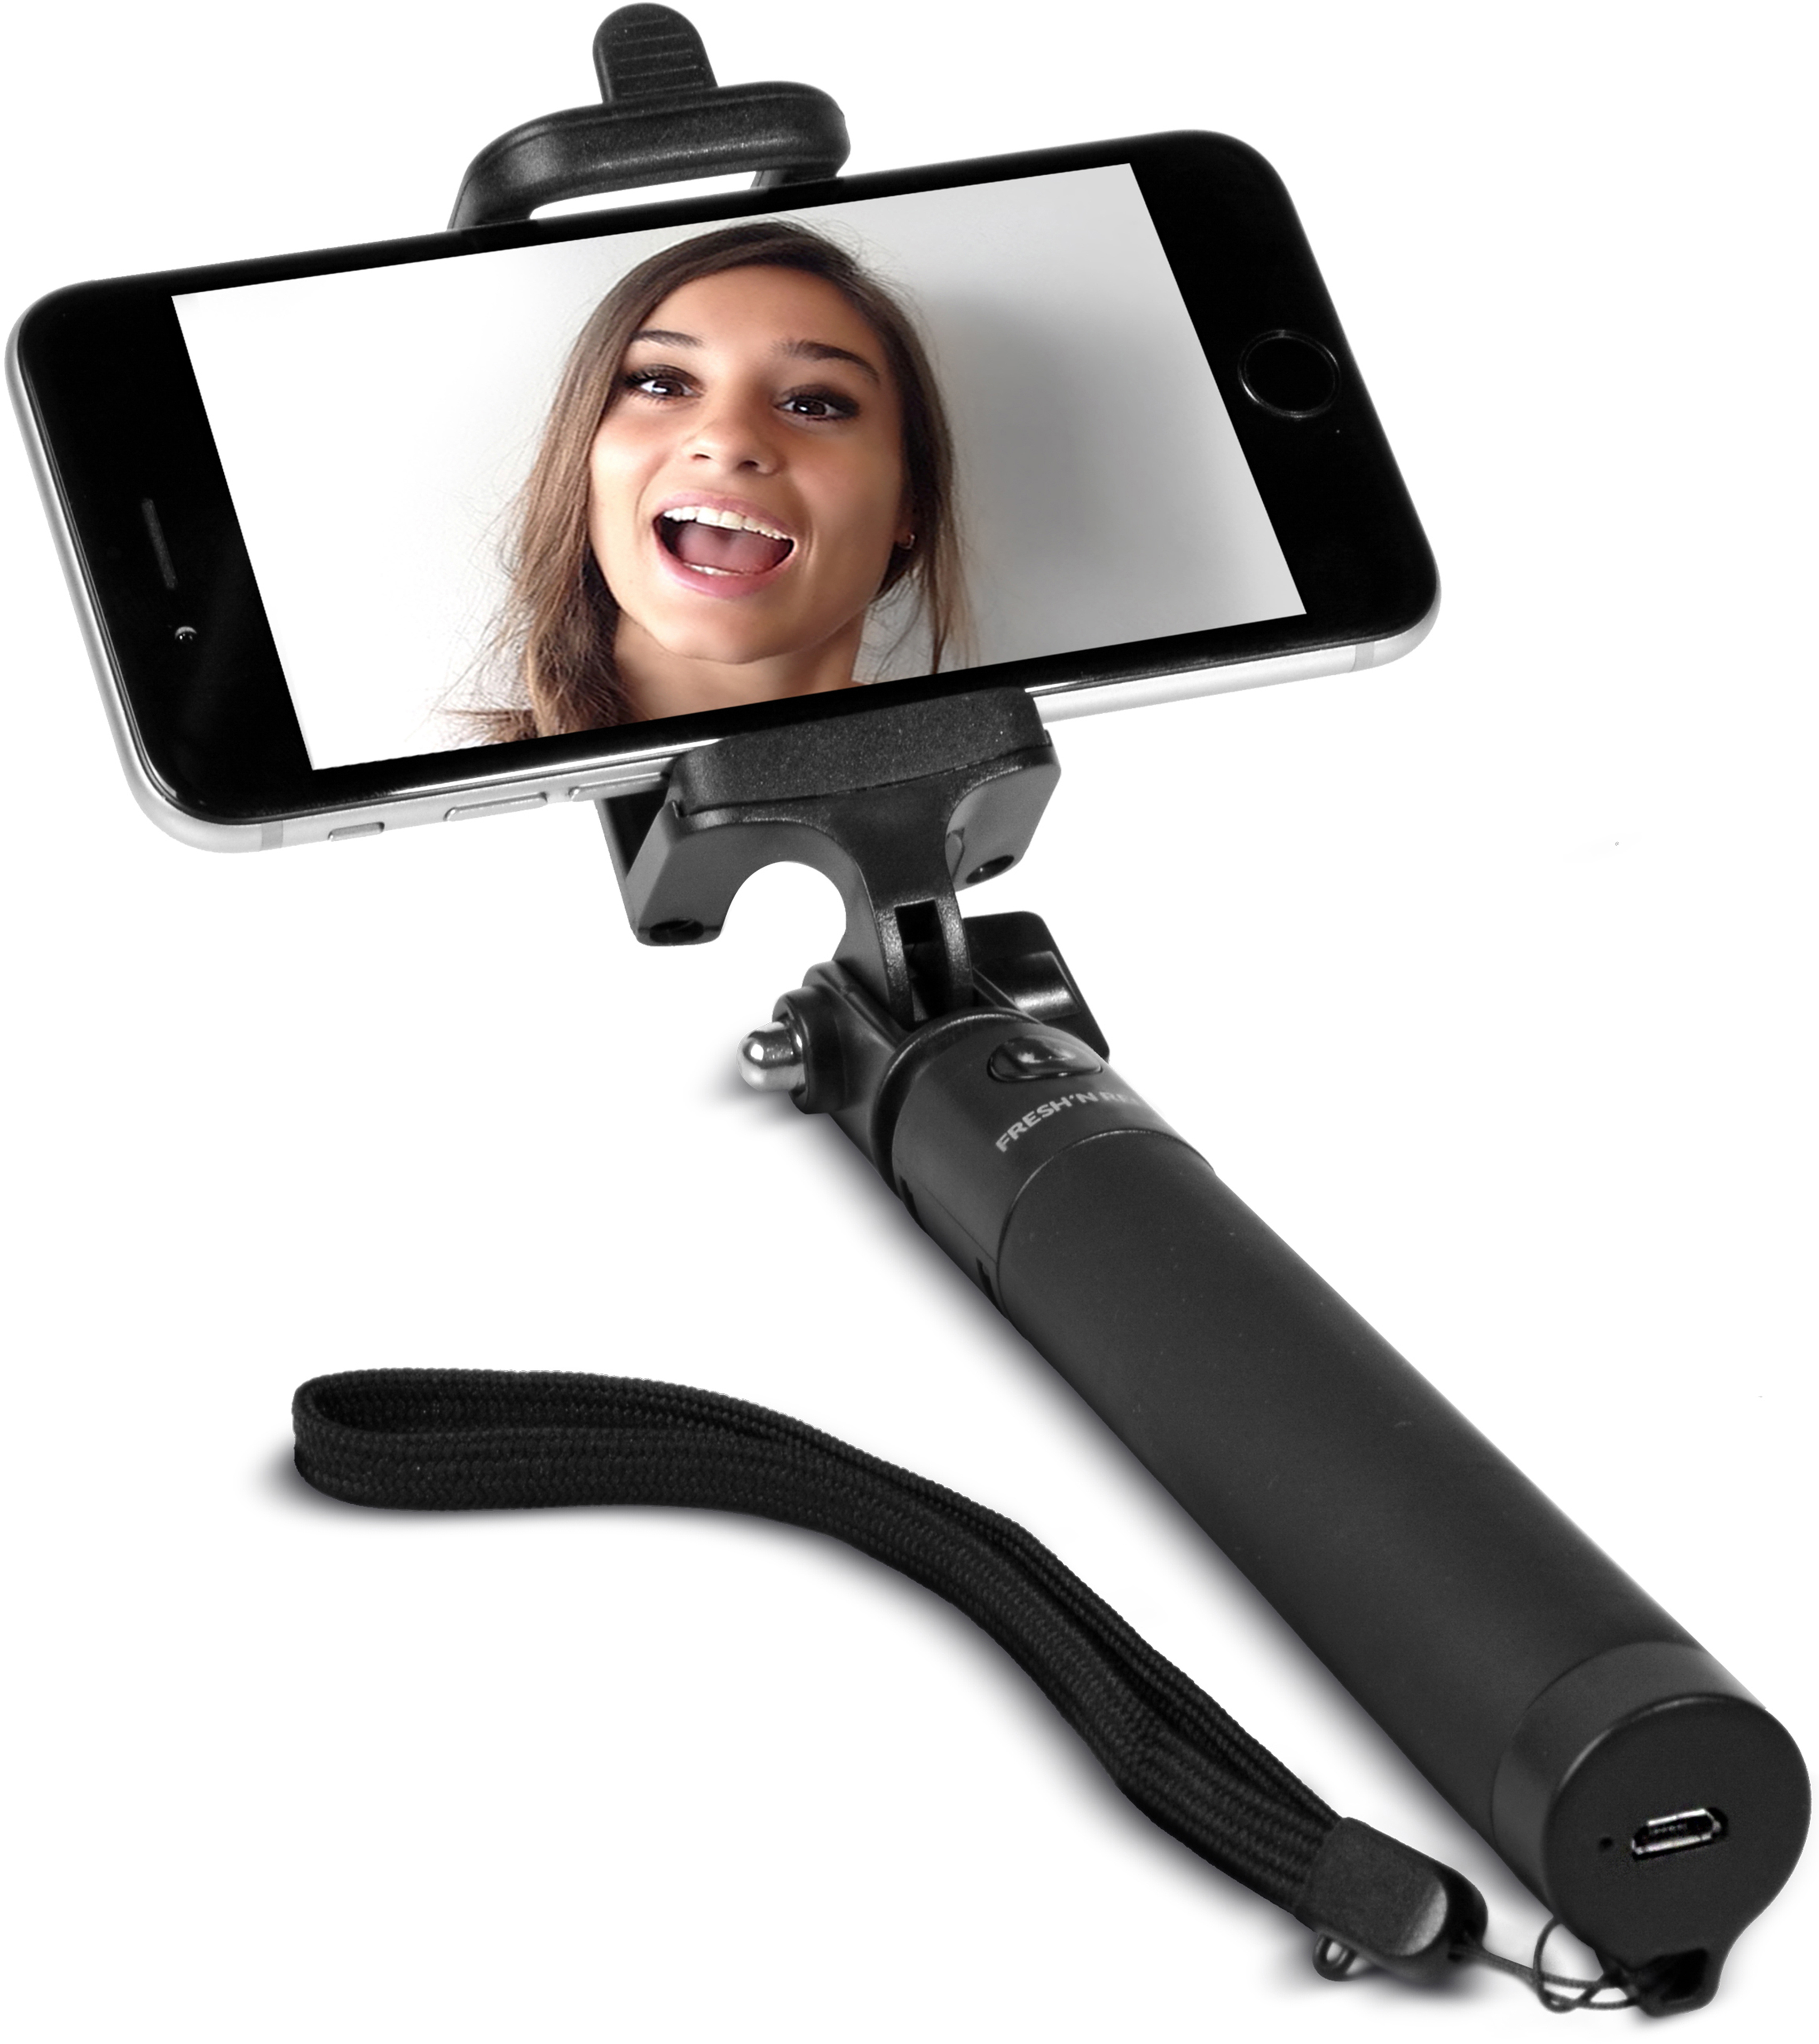 FRESH'N REBEL Wireless Selfie Stick 2nd 5SS110BL black black